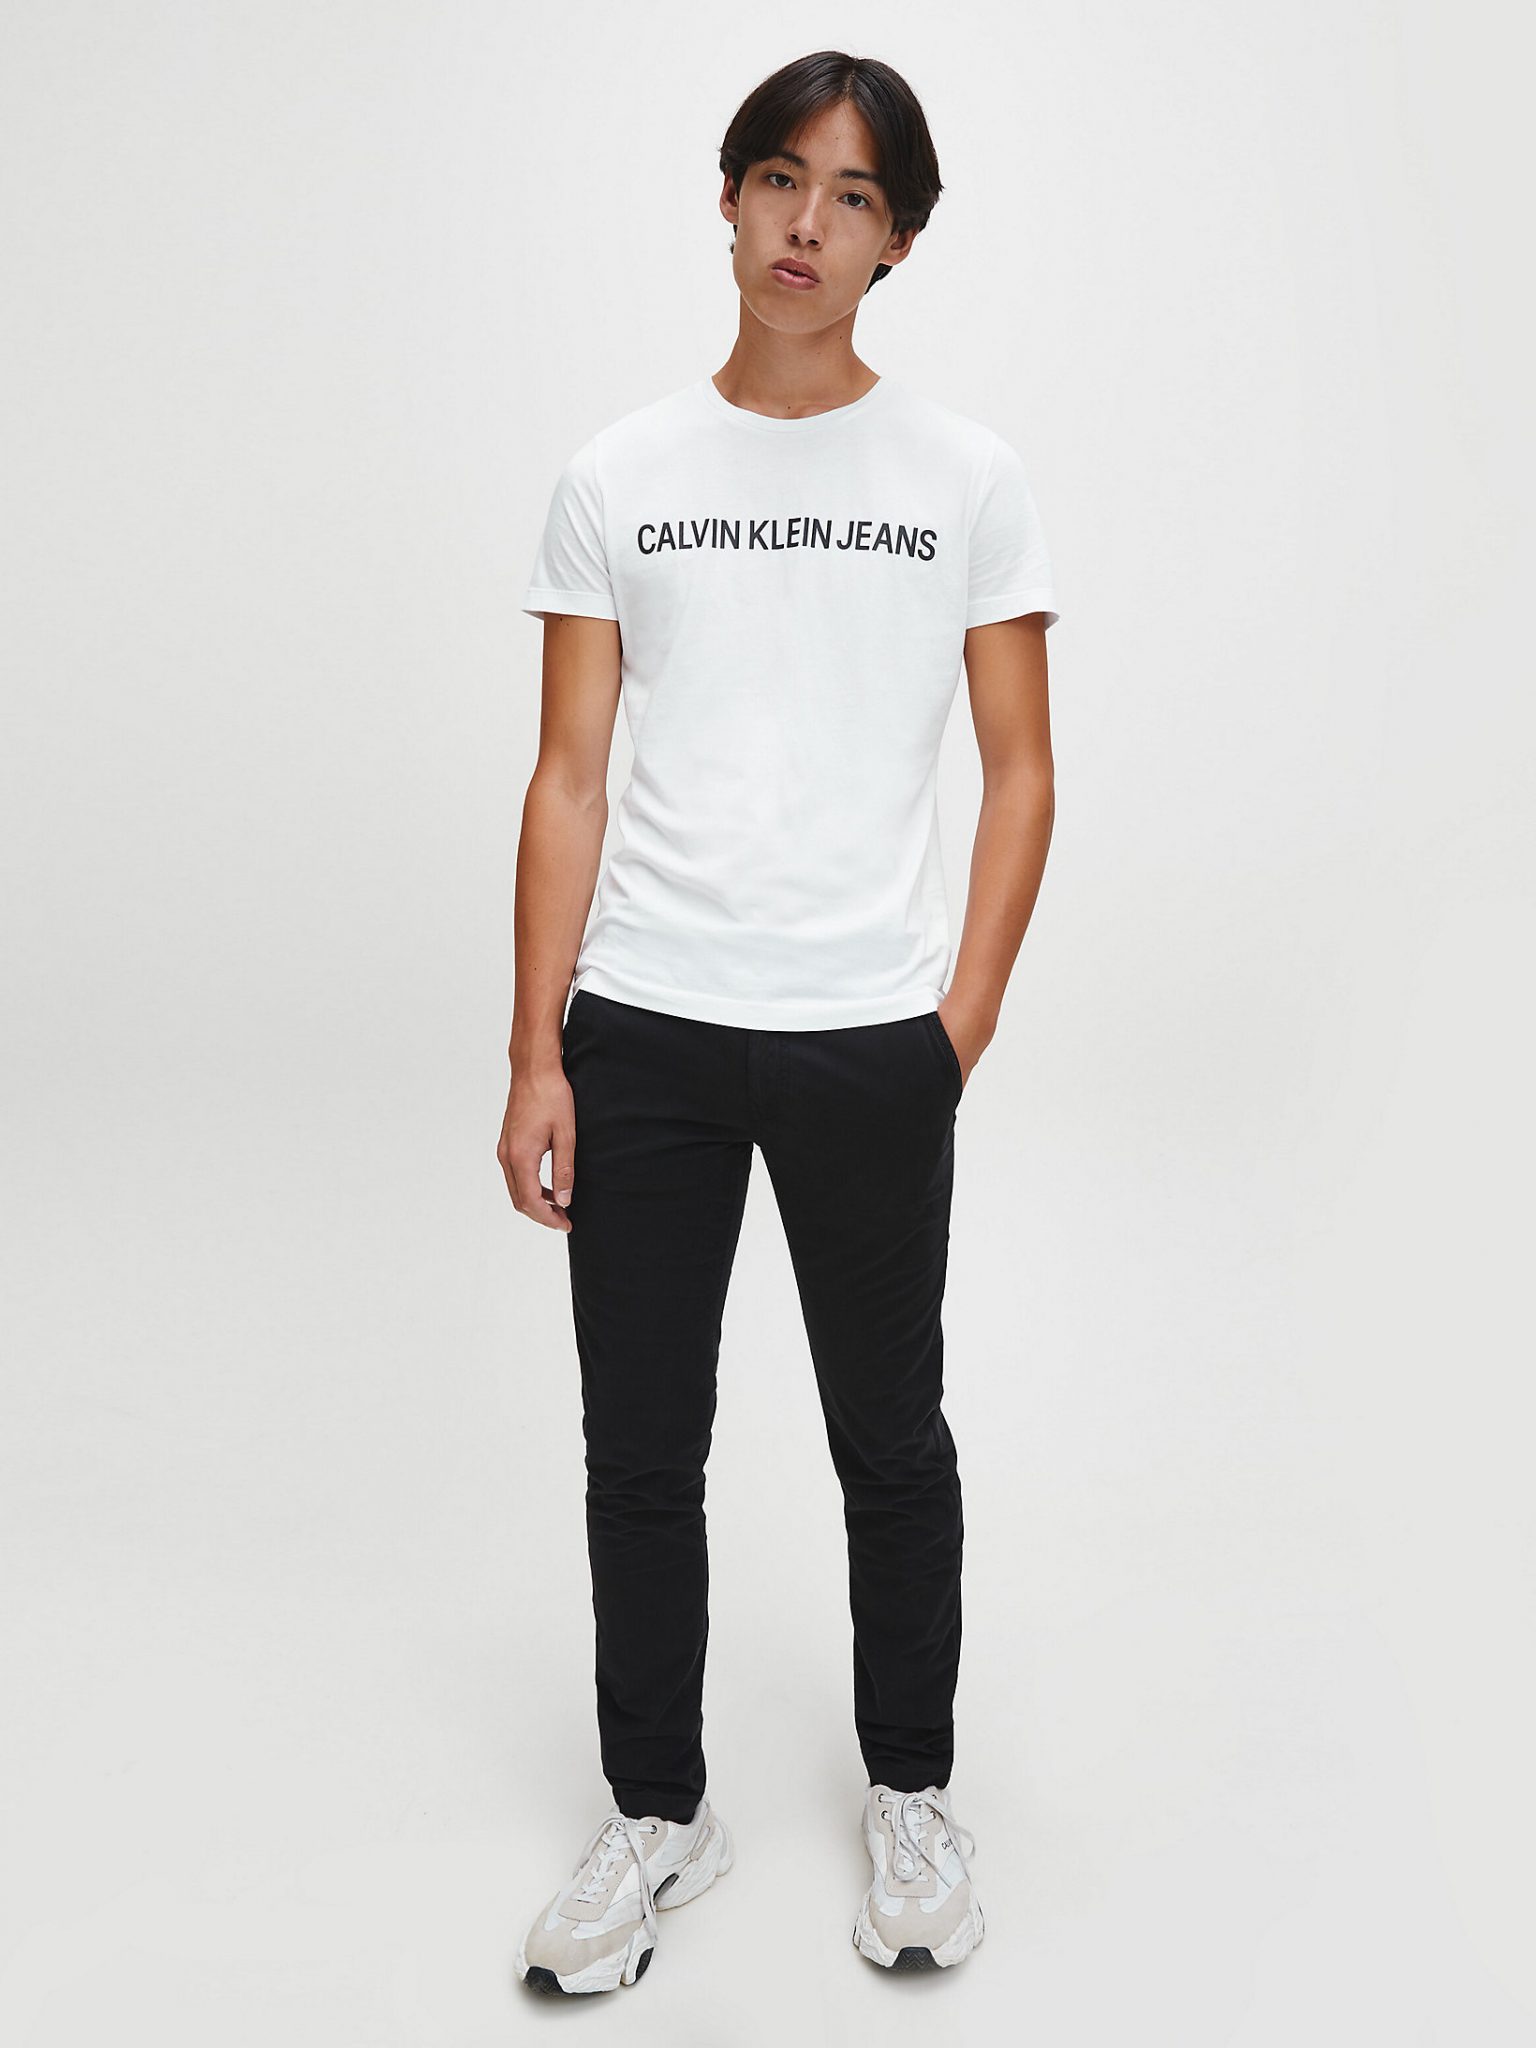 Buy Calvin Klein Institutional logo T-shirt White Scandinavian Fashion Store Bright 